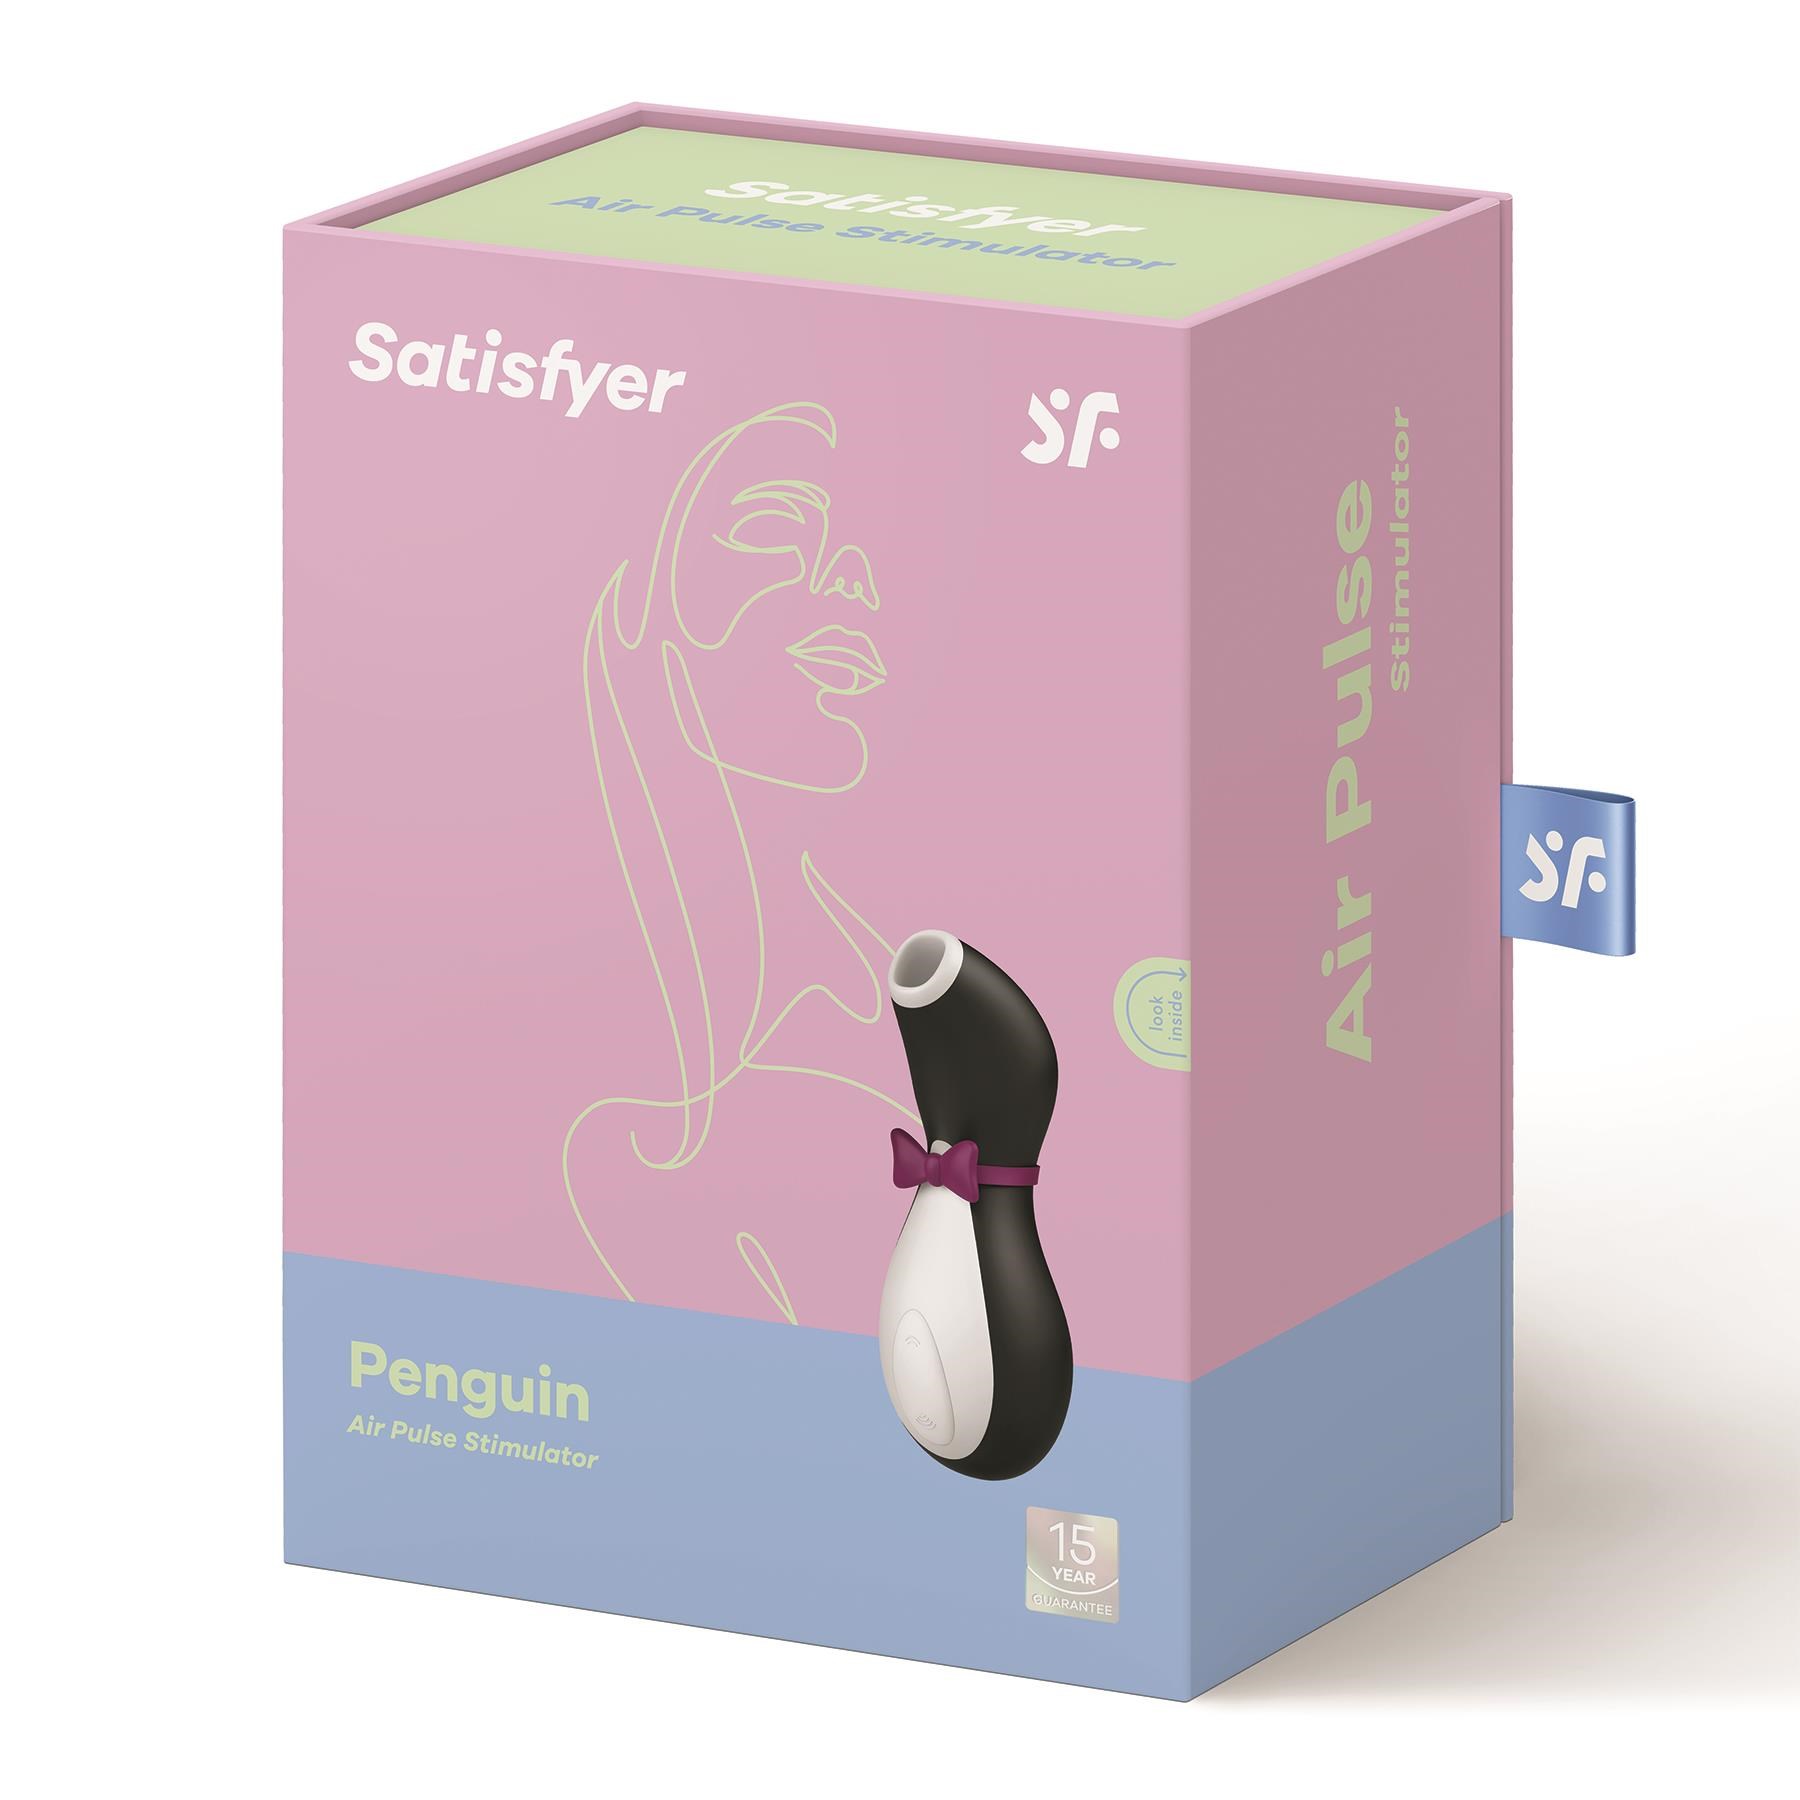 Satisfyer Pro Penguin Next Generation Package Shot